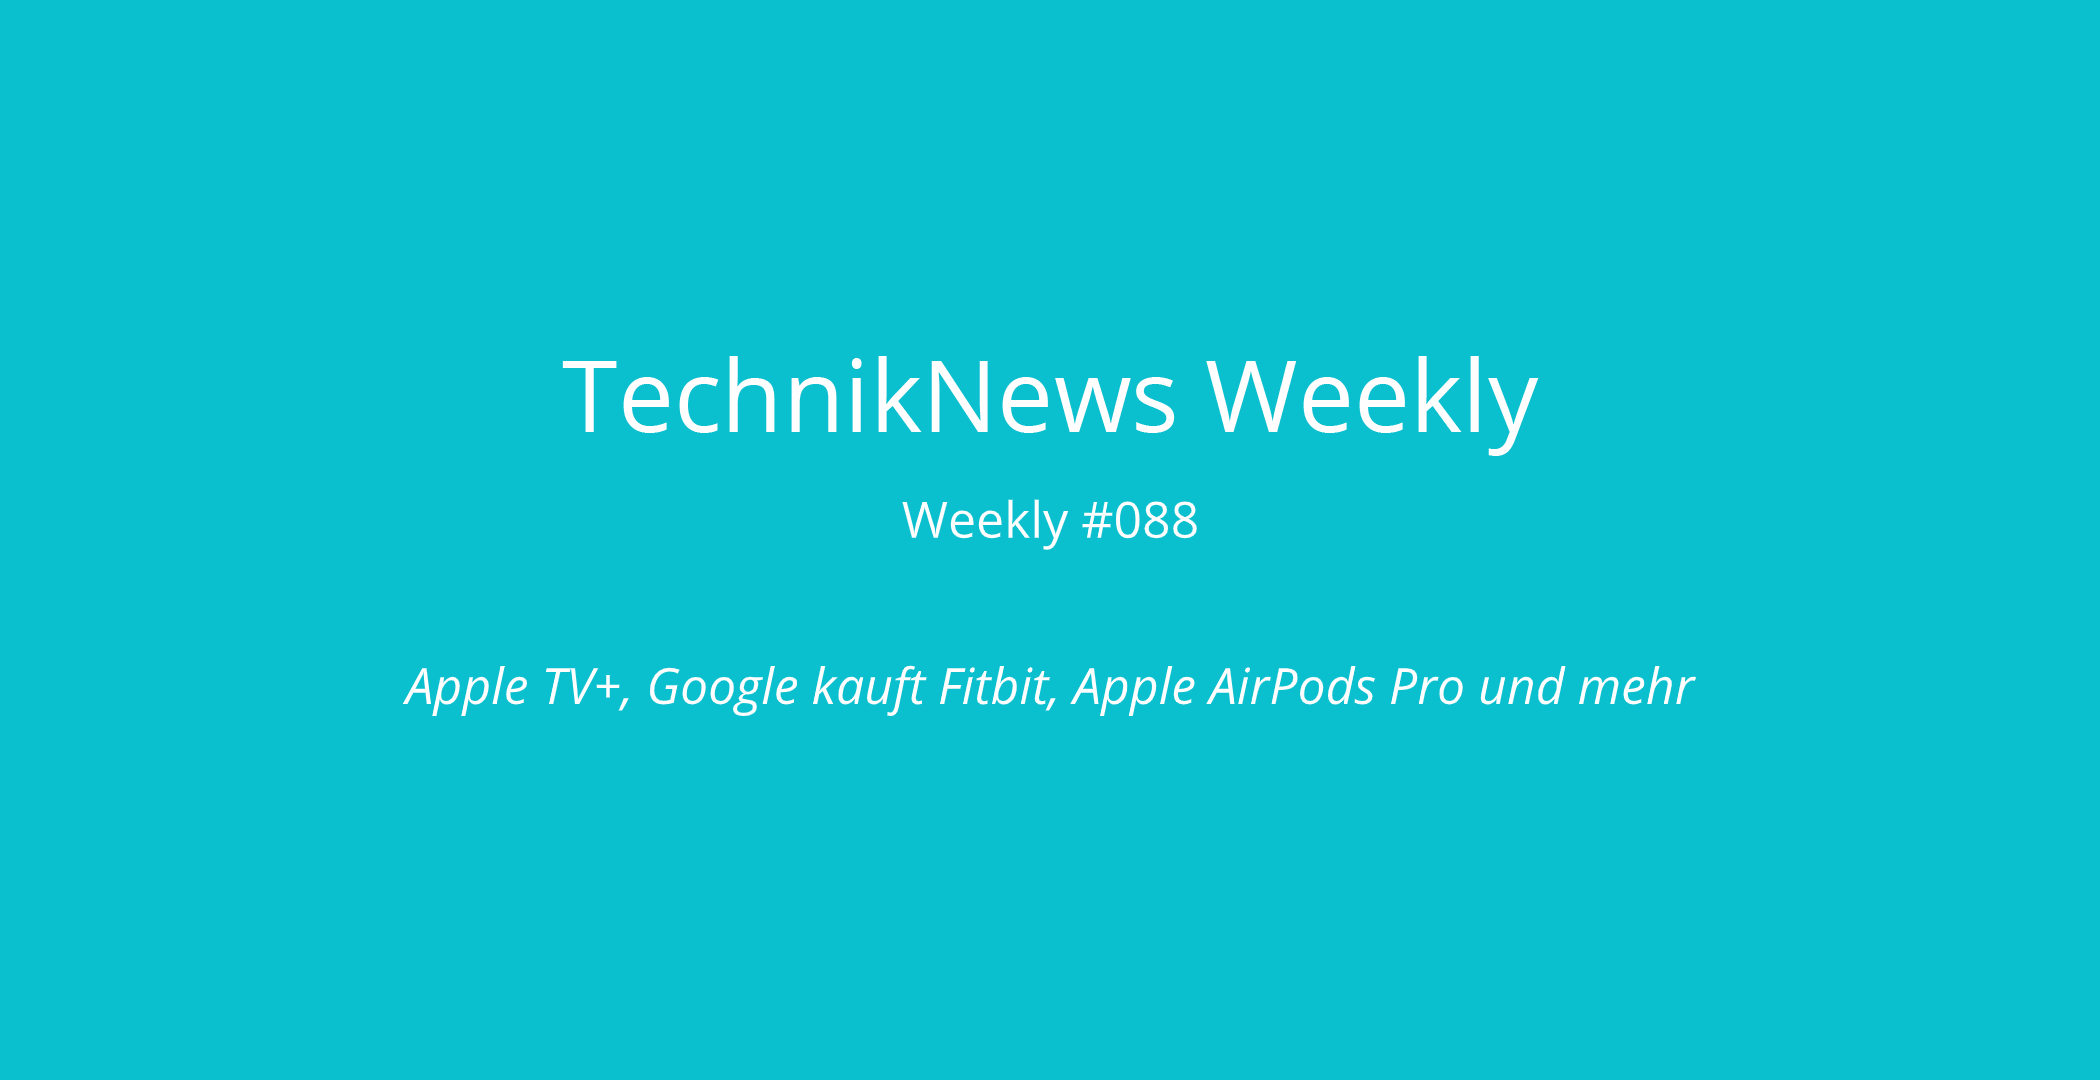 TechnikNews Weekly 088